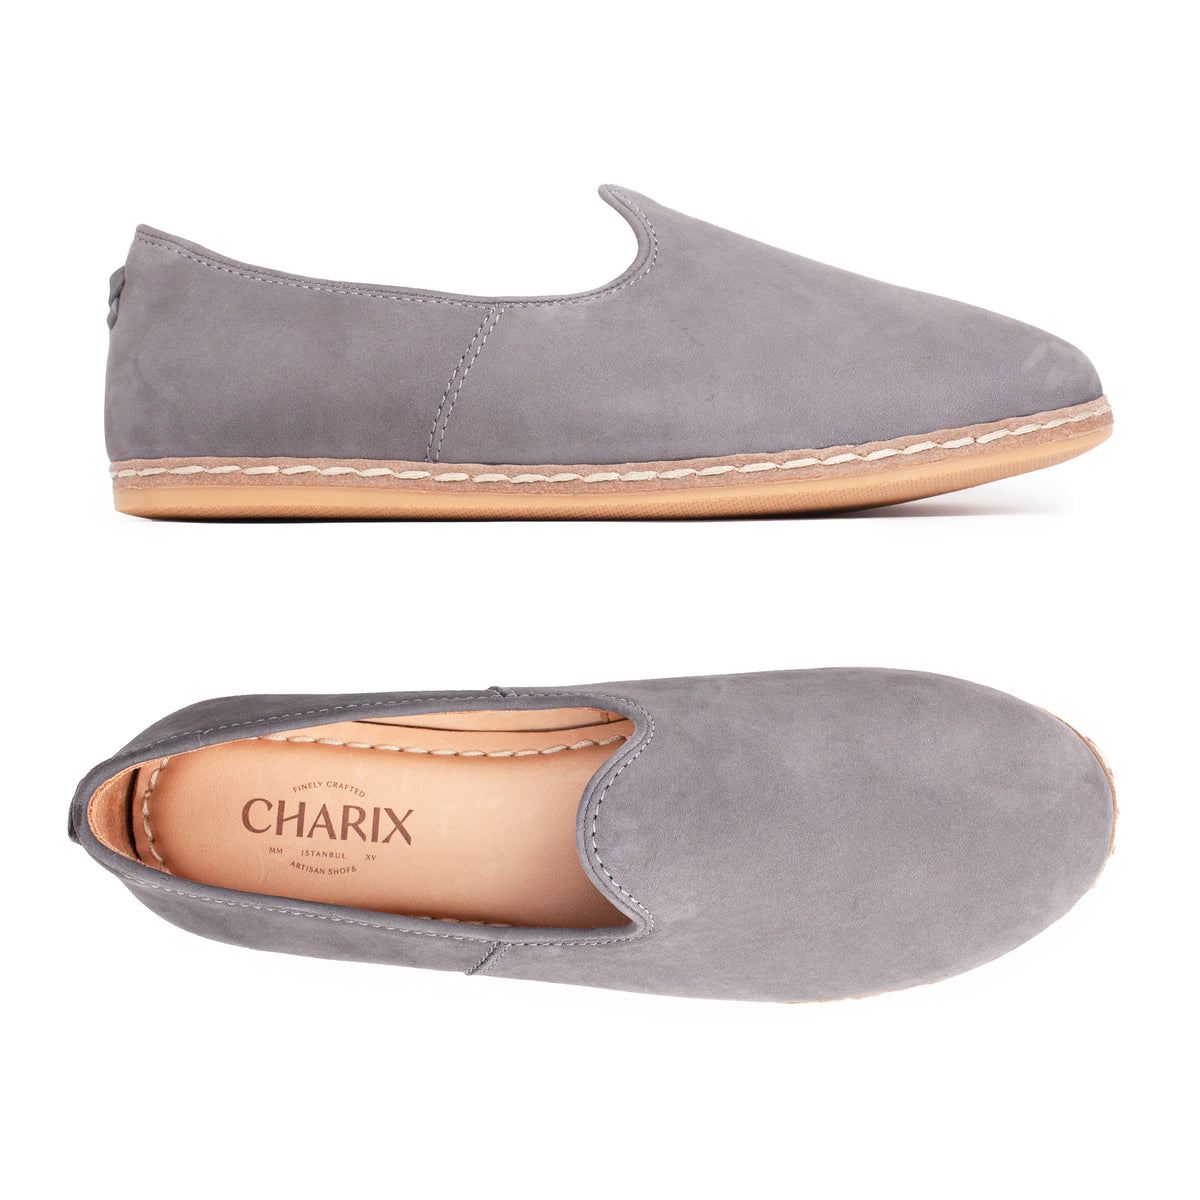 Graphite - Women's - Charix Shoes